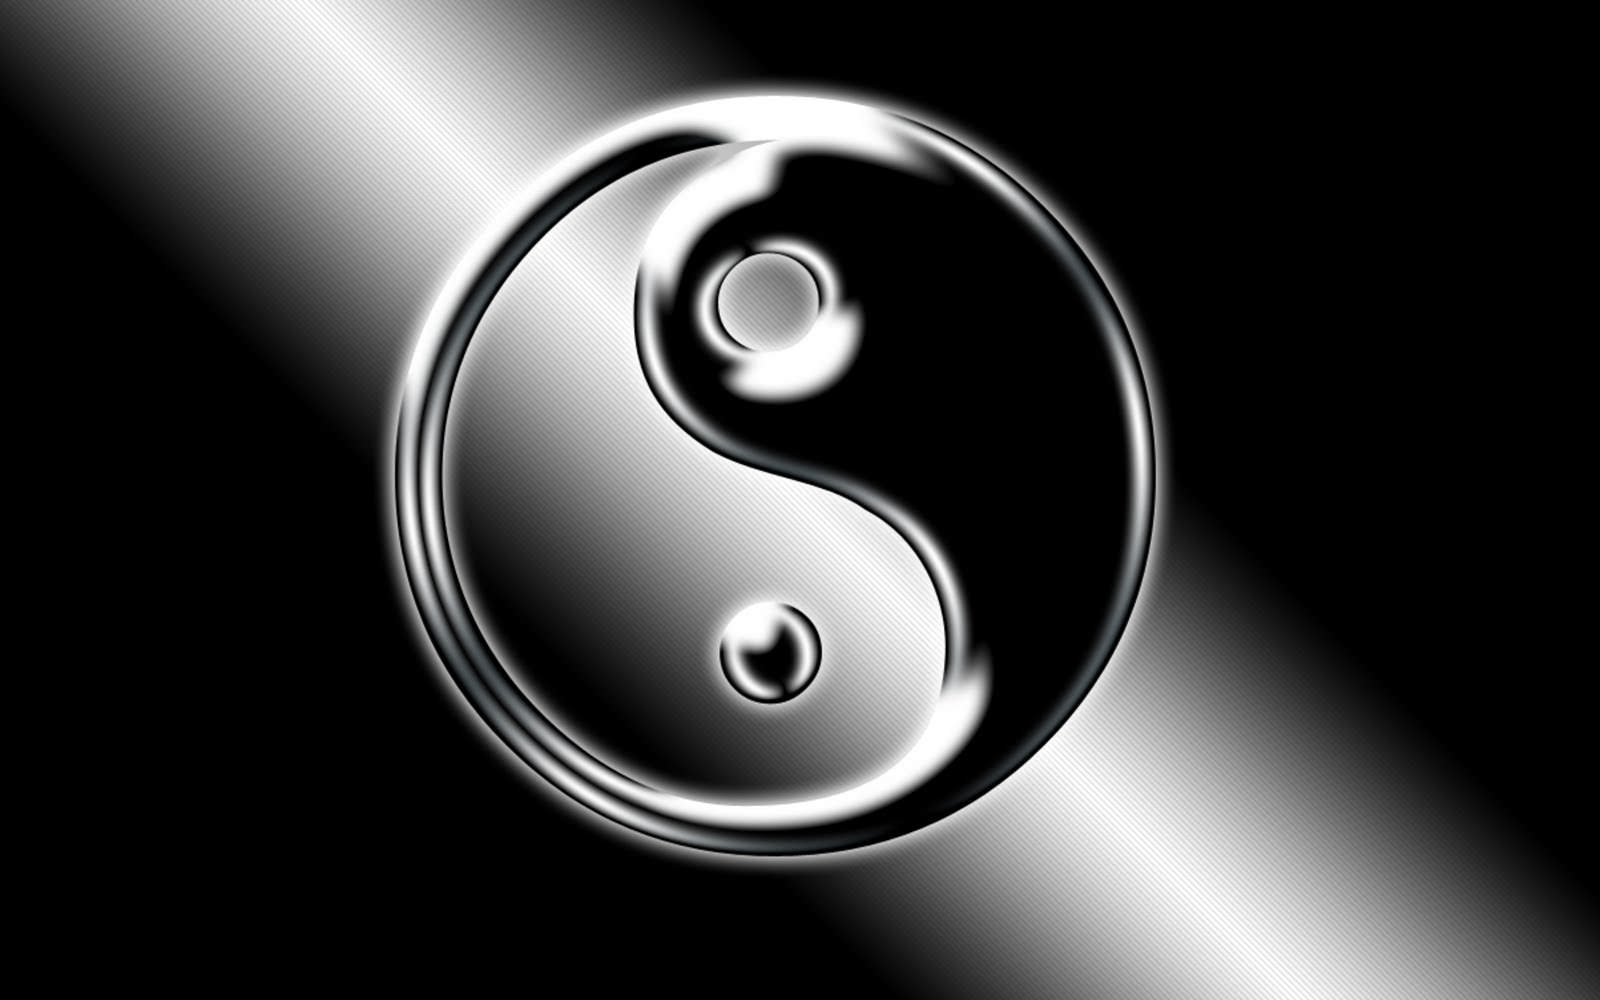 3D Ying Yang Logo Wallpaper Image Wallpaper. High Resolution